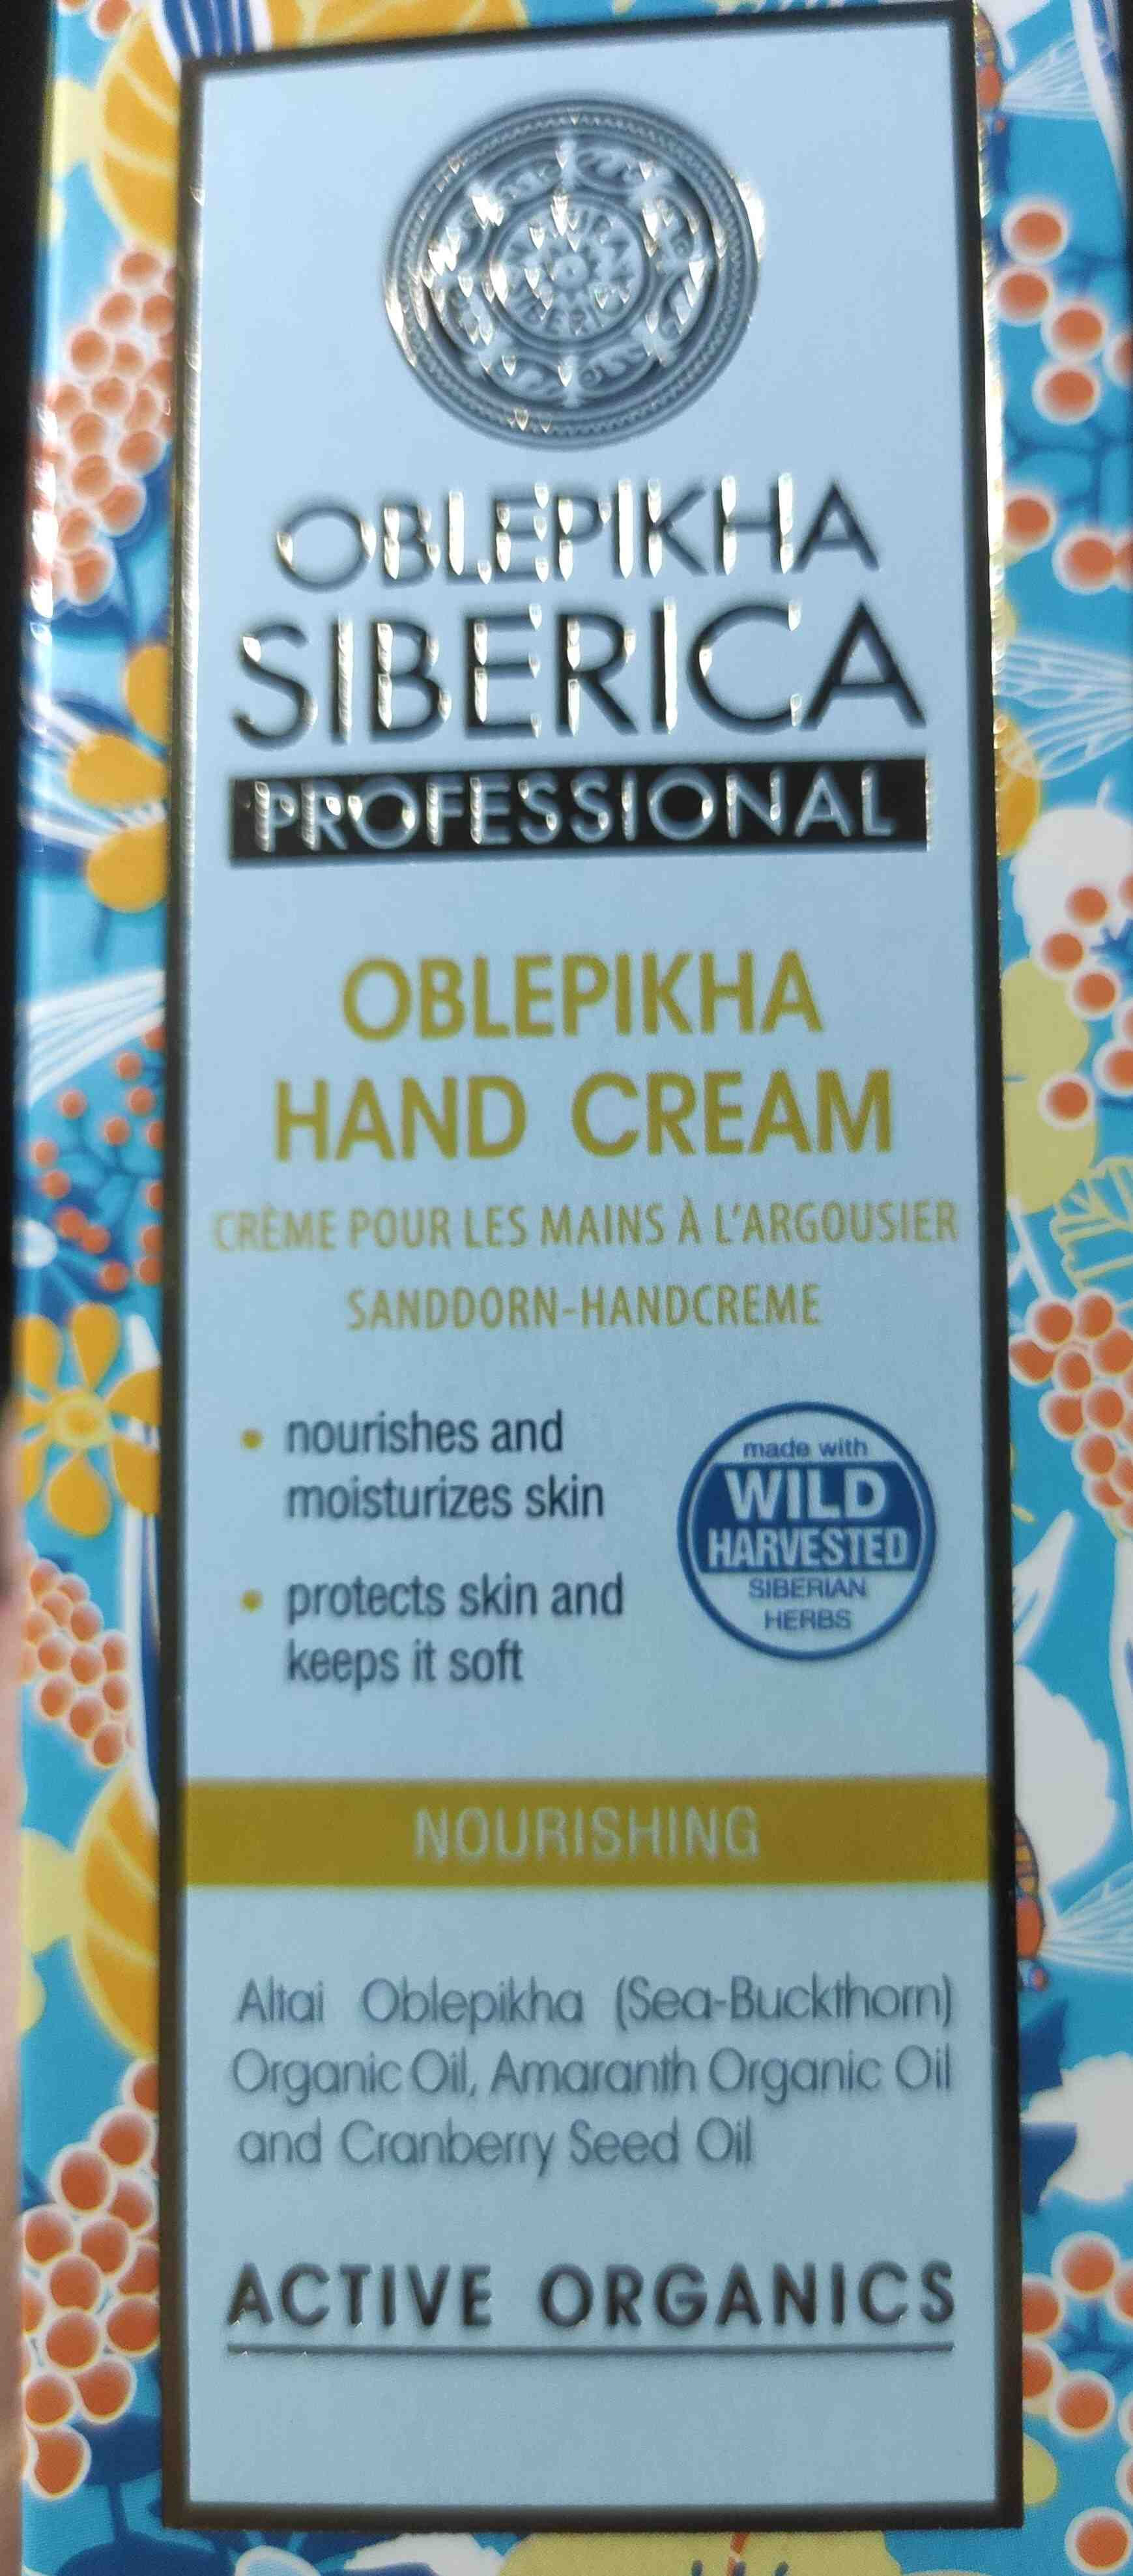 Oblekpikha Hand Cream - Tuote - en